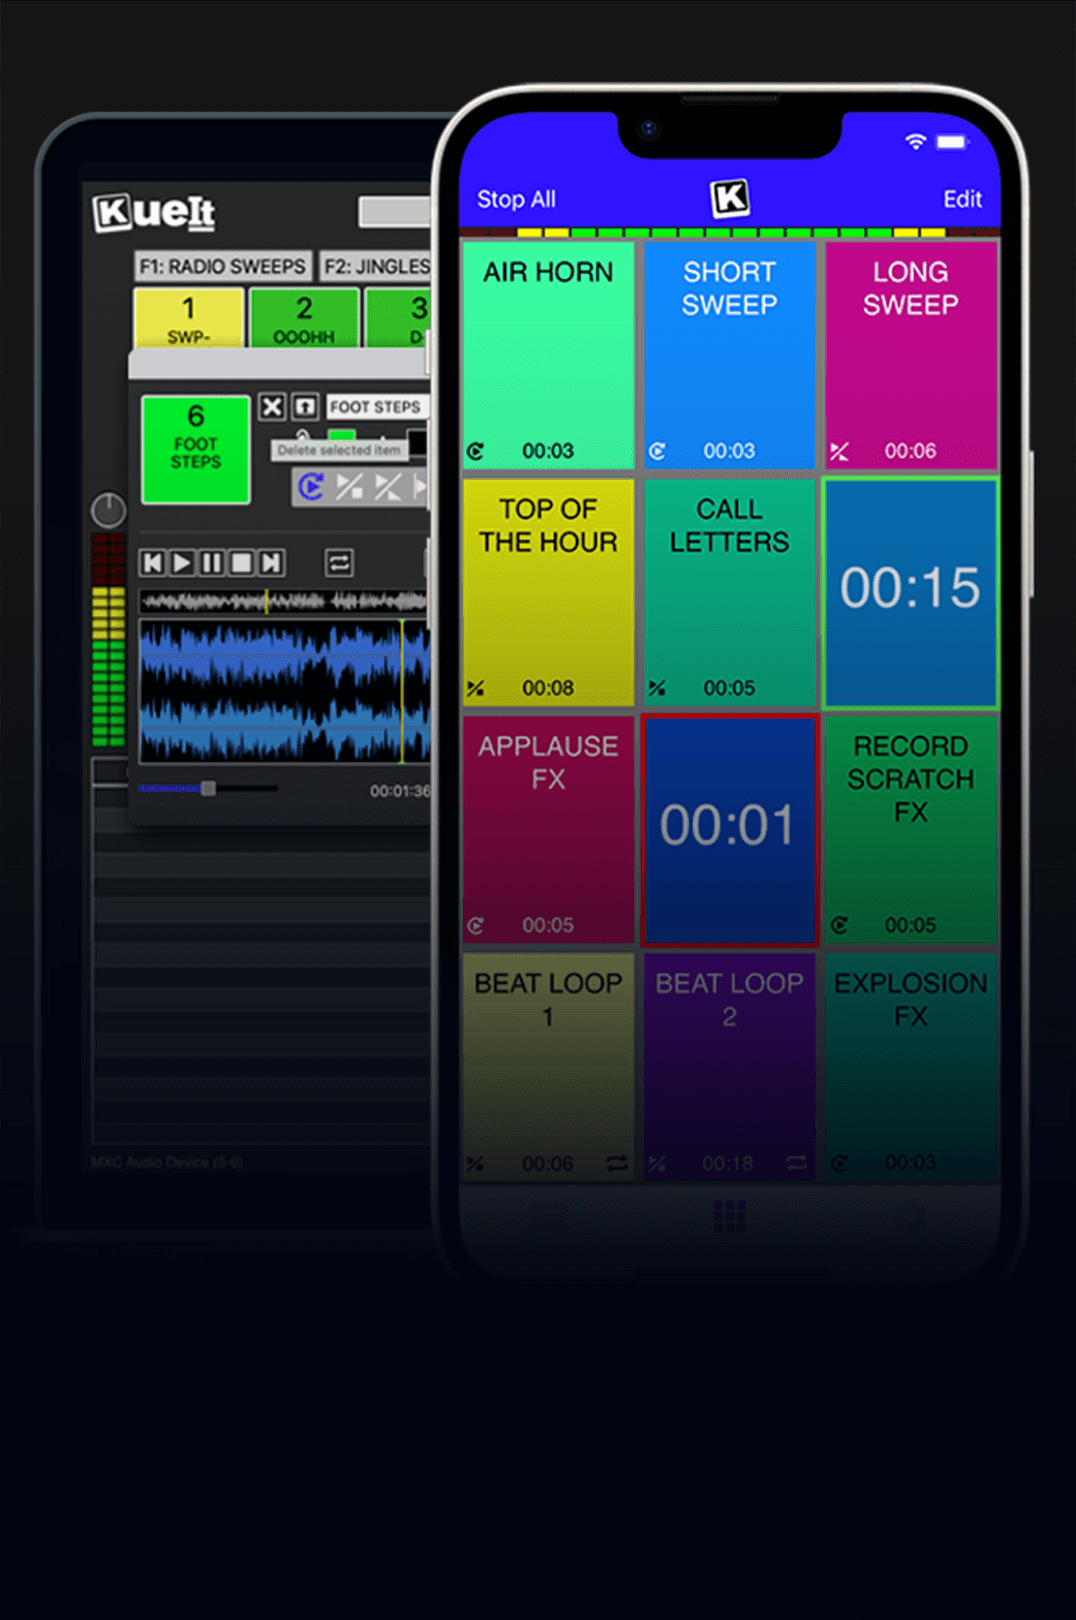 KueIt DJ soundboard app software